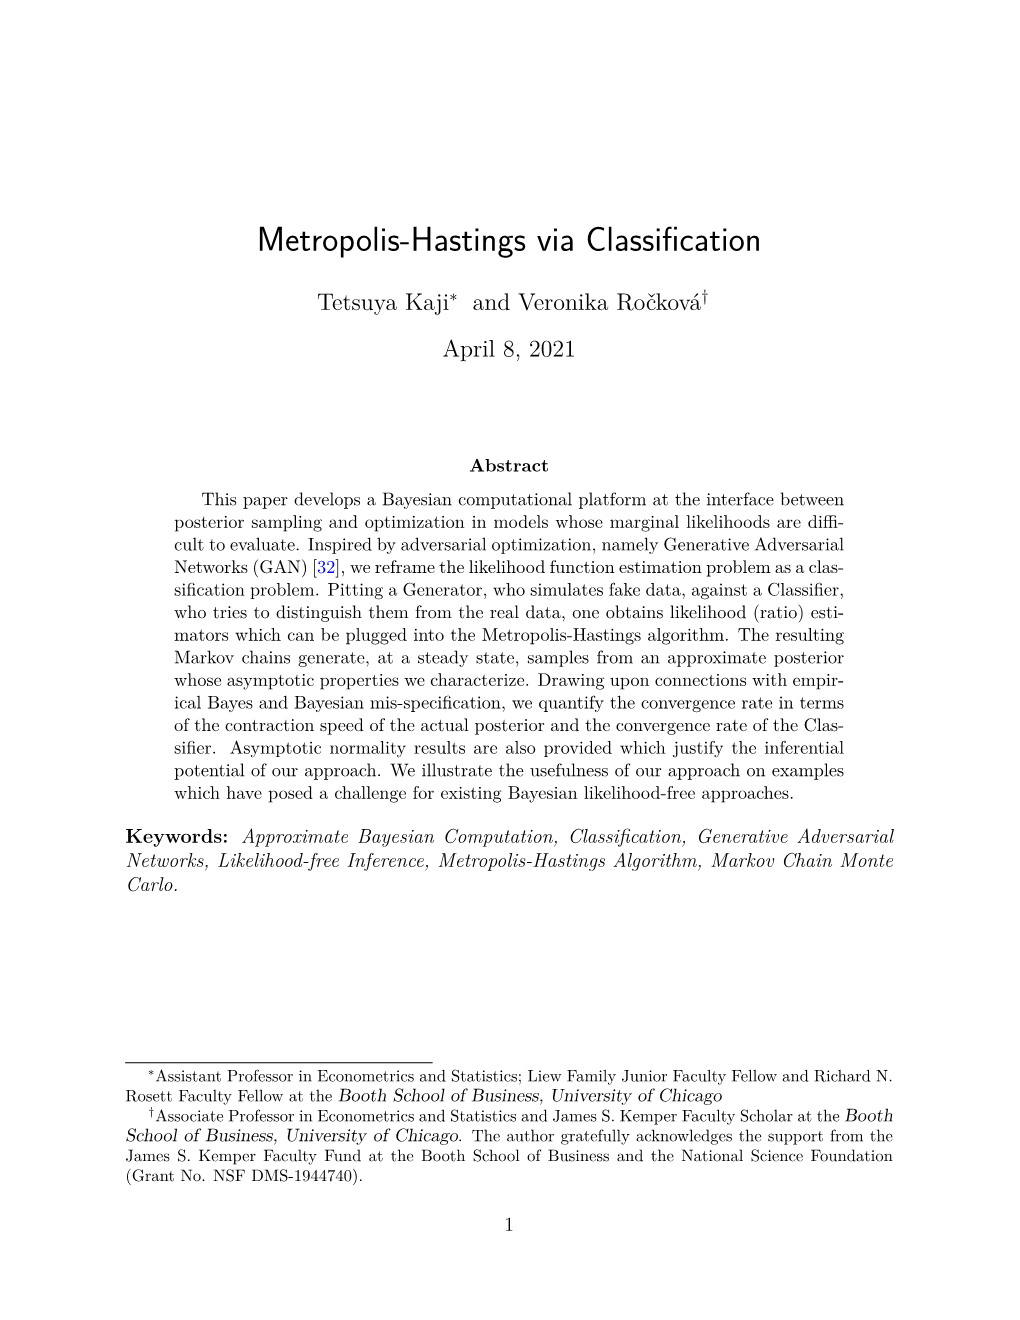 Metropolis-Hastings Via Classification